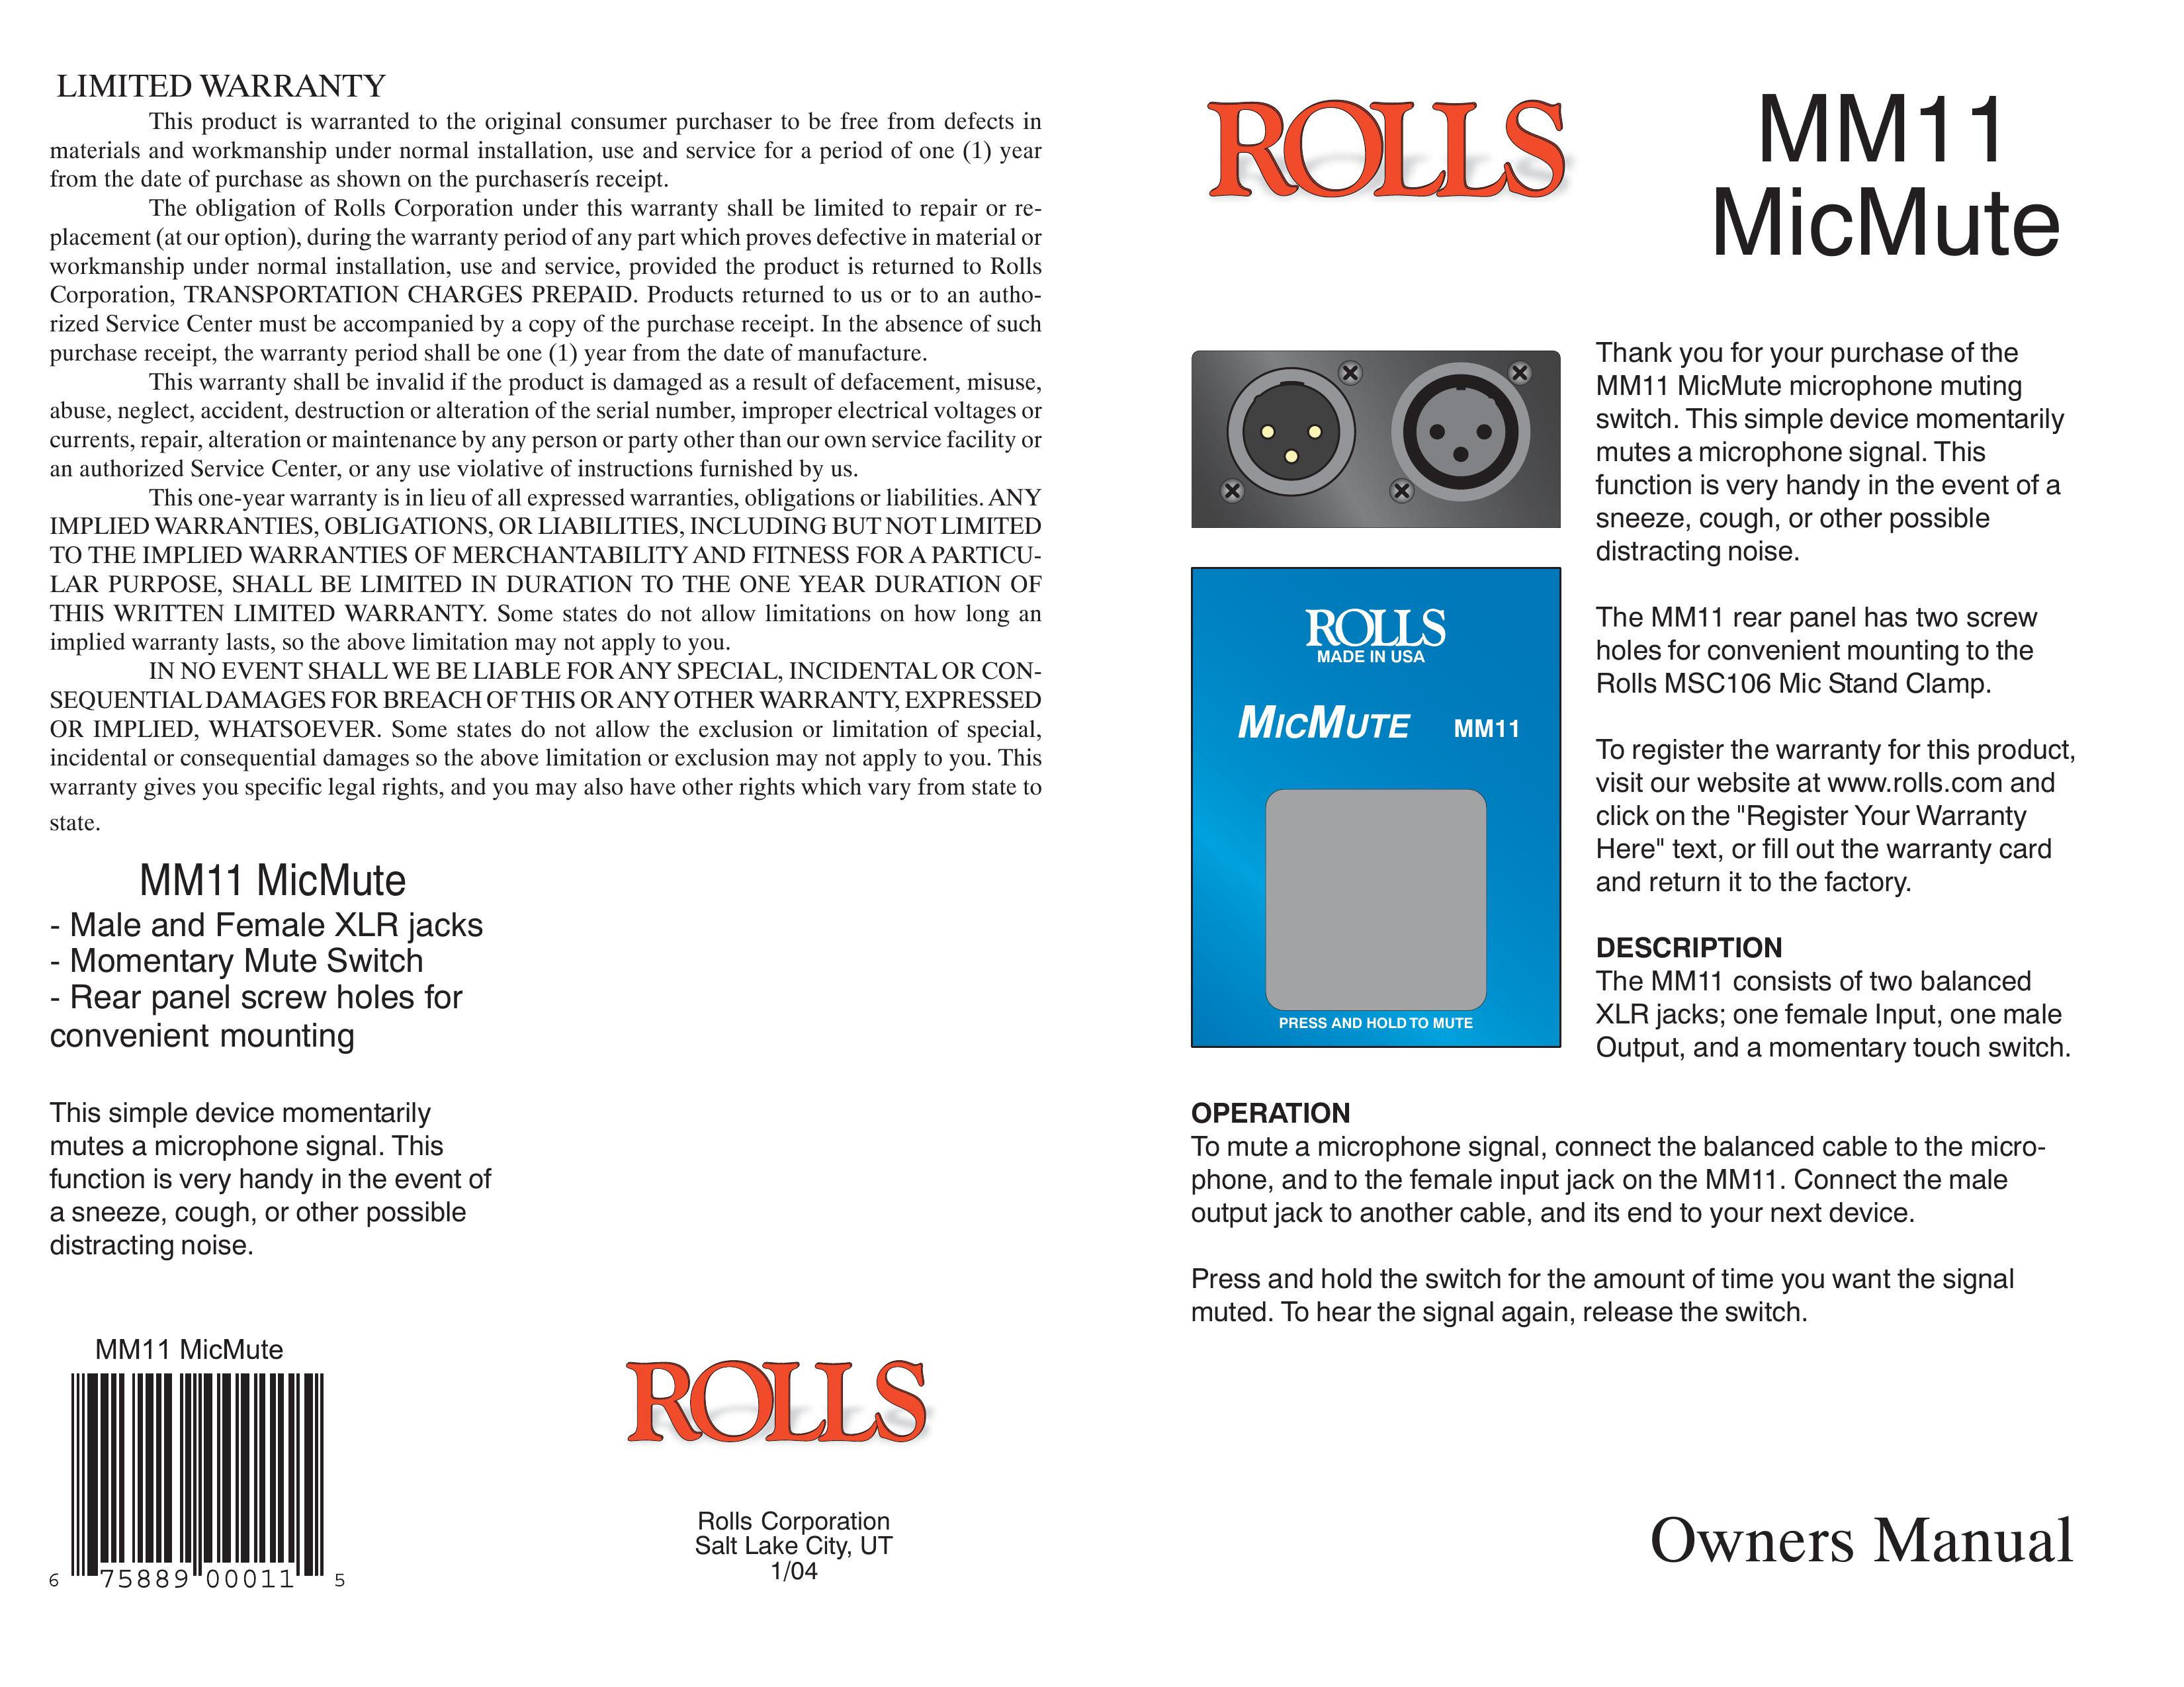 Rolls MM11 Microphone User Manual